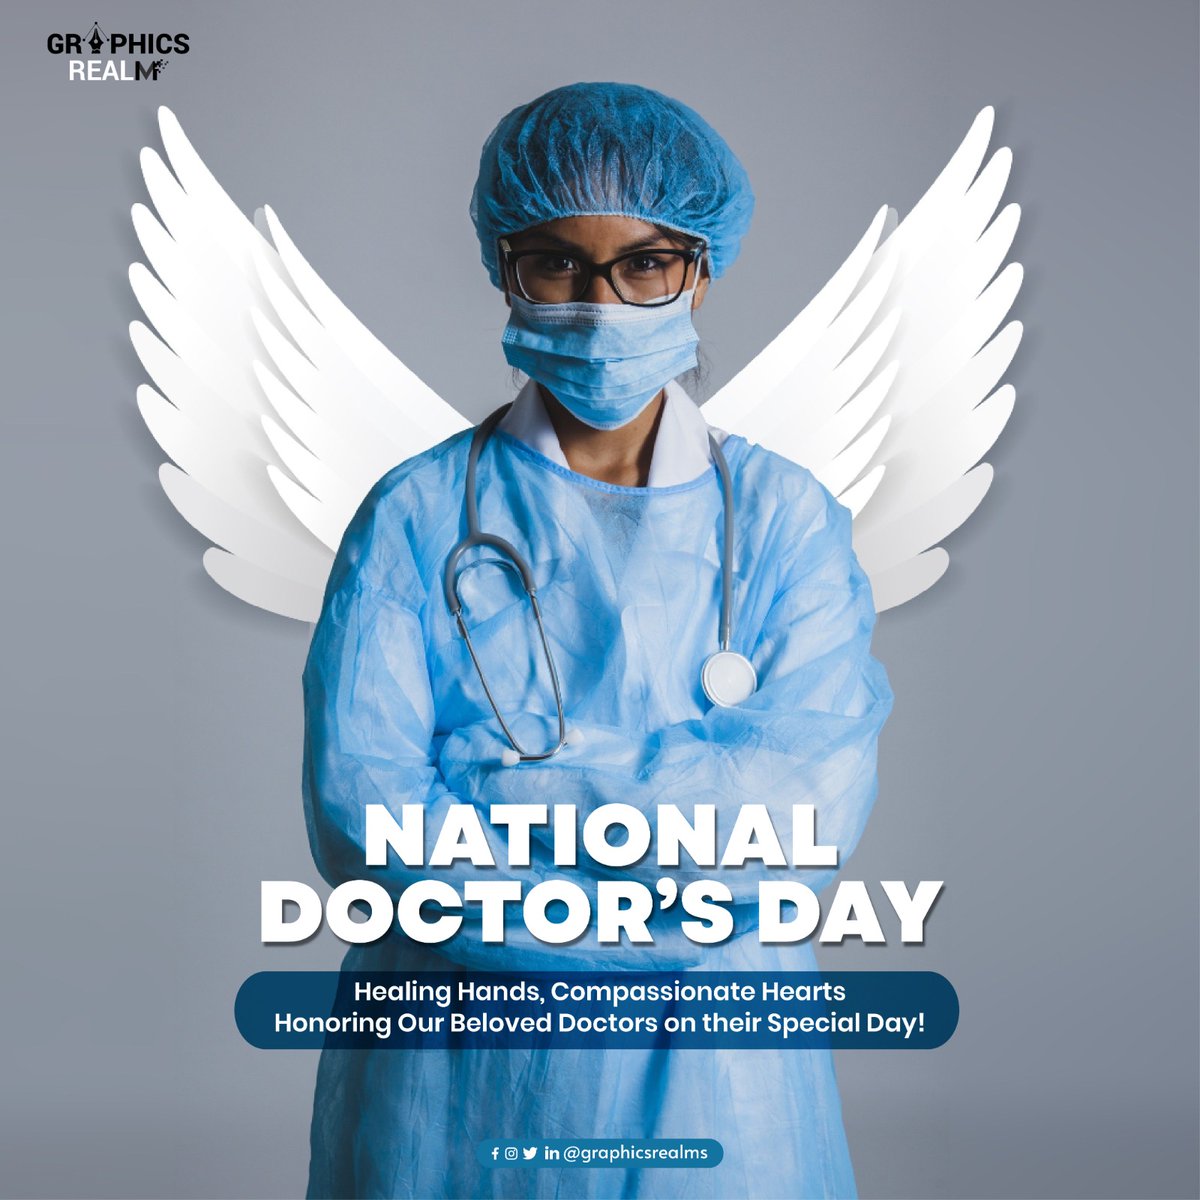 Happy Doctor's Day
#doctor #doctorsday #nationaldoctorsday #salute #hero #savinglife #healingjourney #honor #specialday #doctorslifestyle #angel #thankyou #thankyoudoctor #healthylifestyle #healthycommunity #healthcare #appreciationpost #grateful #celebratingdoctors #medical